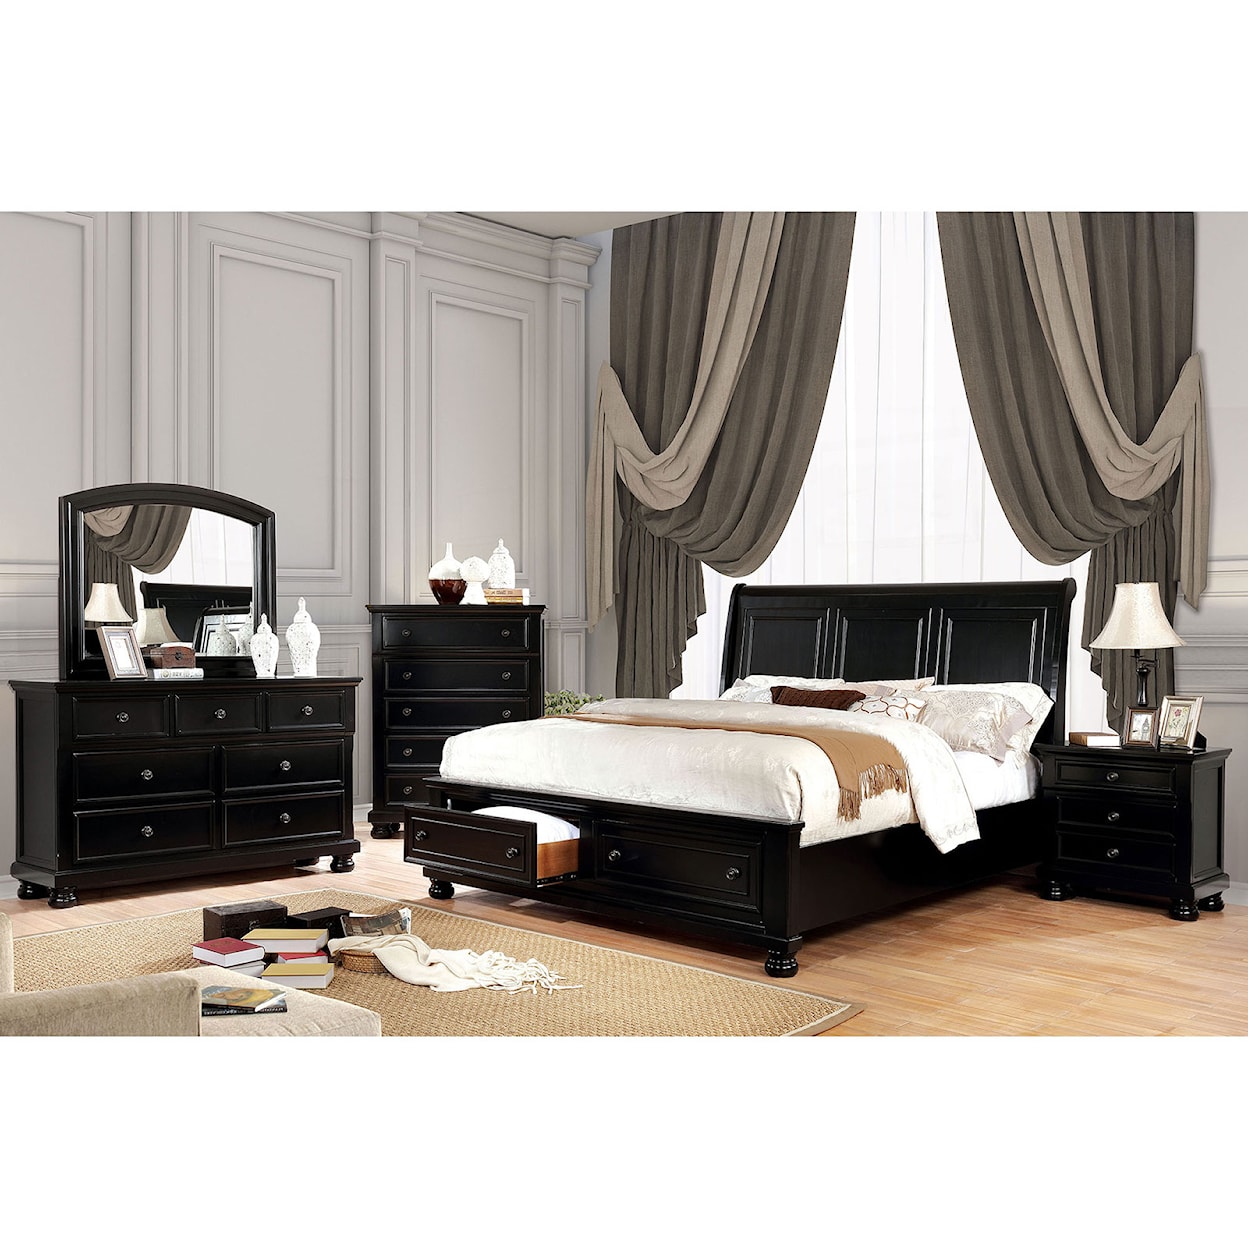 Furniture of America Castor California King Bedroom Set